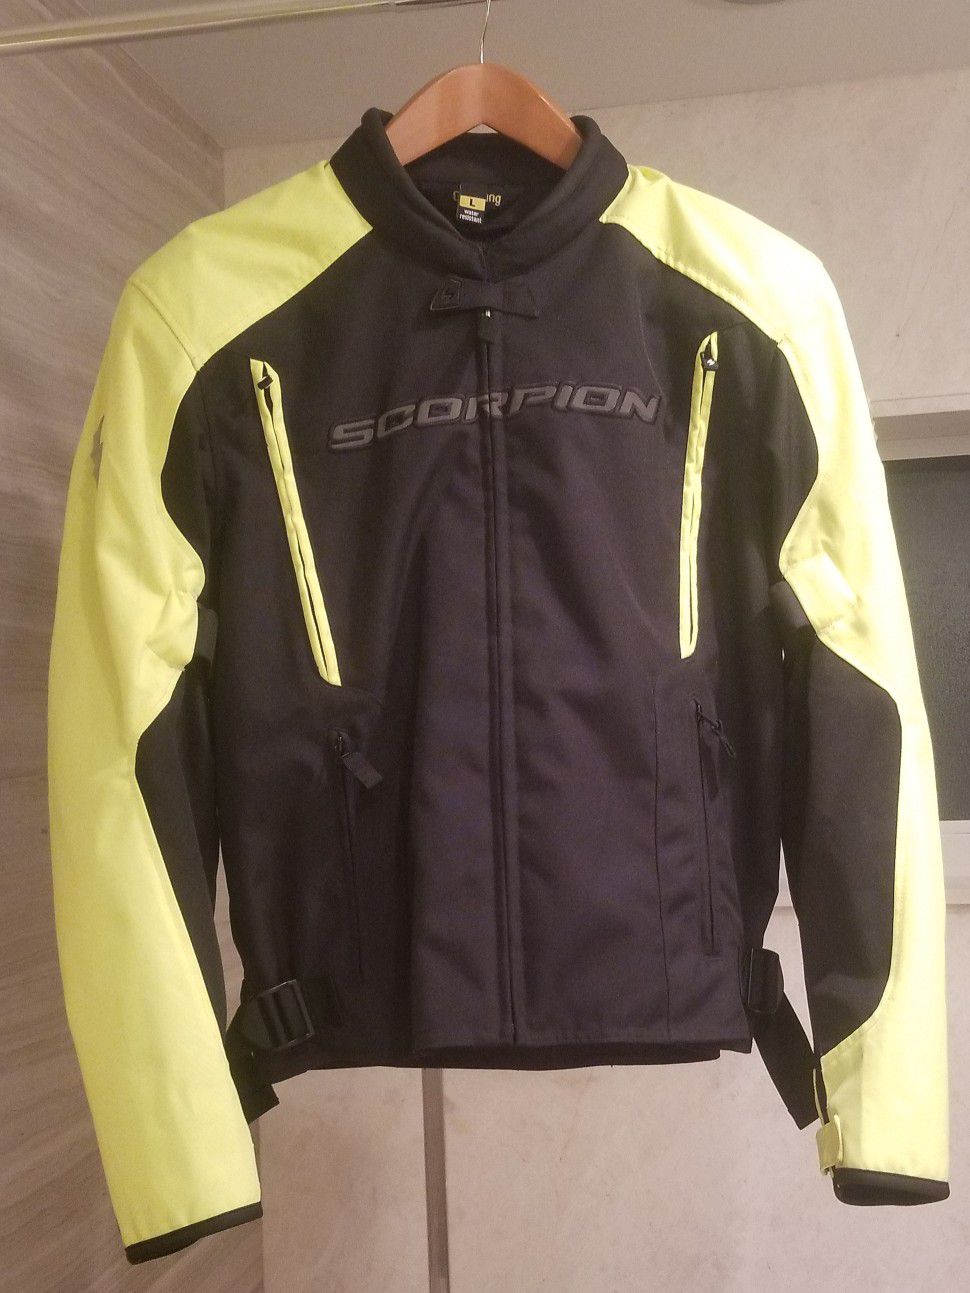 Scorpion Men’s Yellow / Hi Vis Motorcycle Jacket